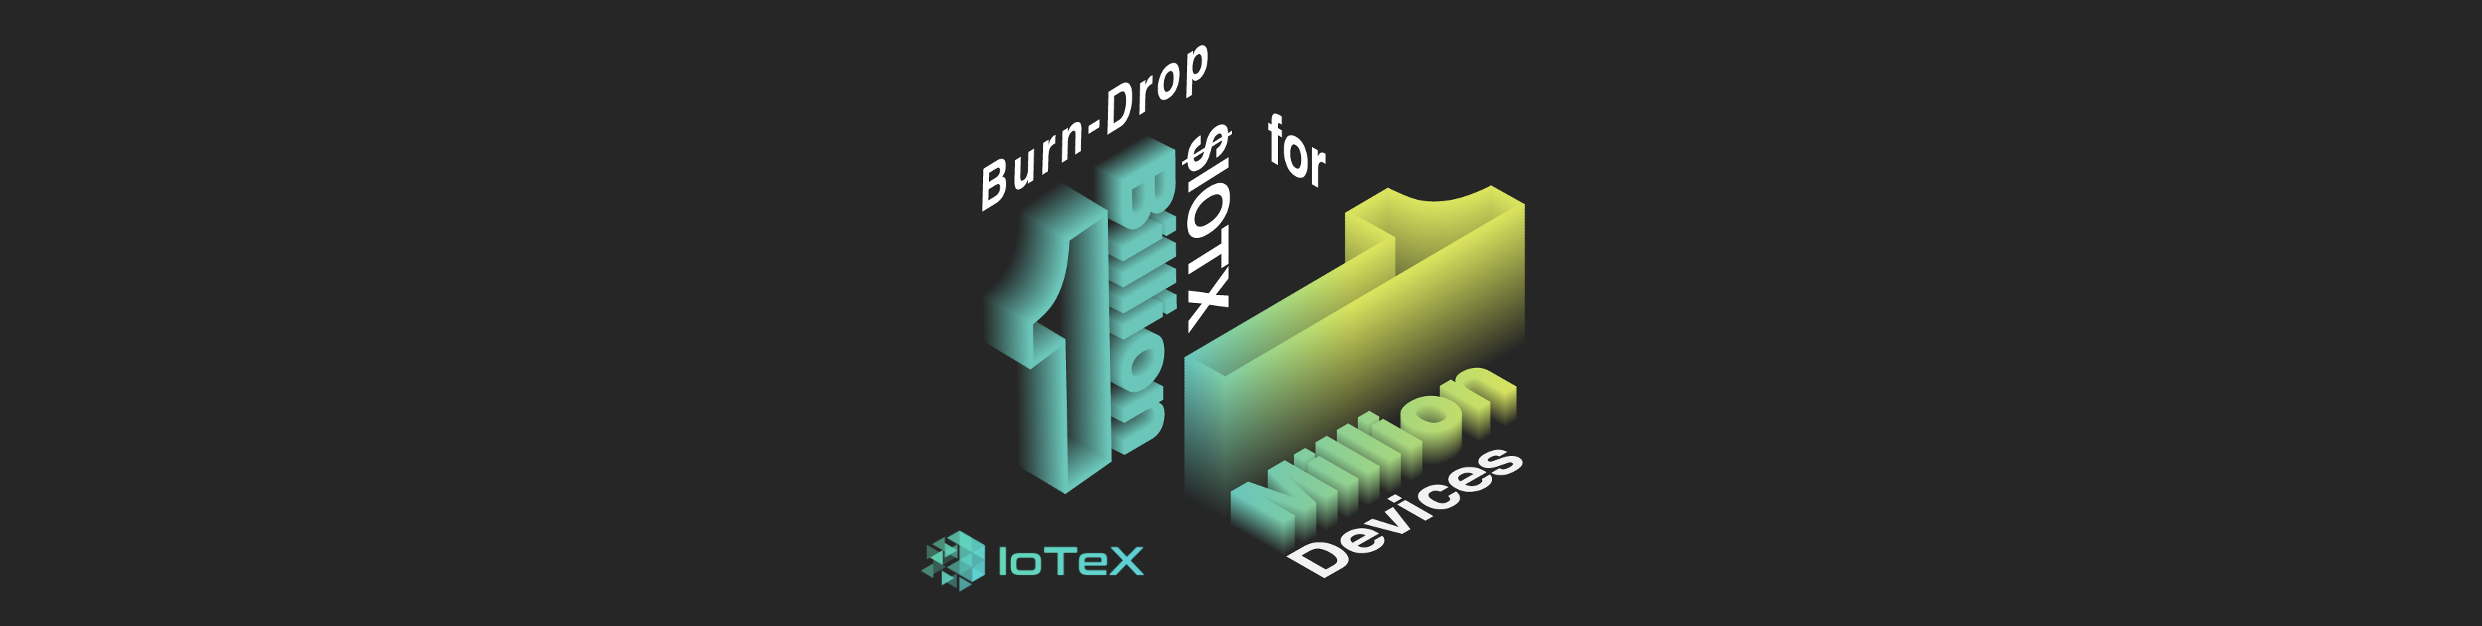 IoTeX Tokenomics — Part 3: Burn-Drop to Bootstrap 1 Million IoTeX Devices!